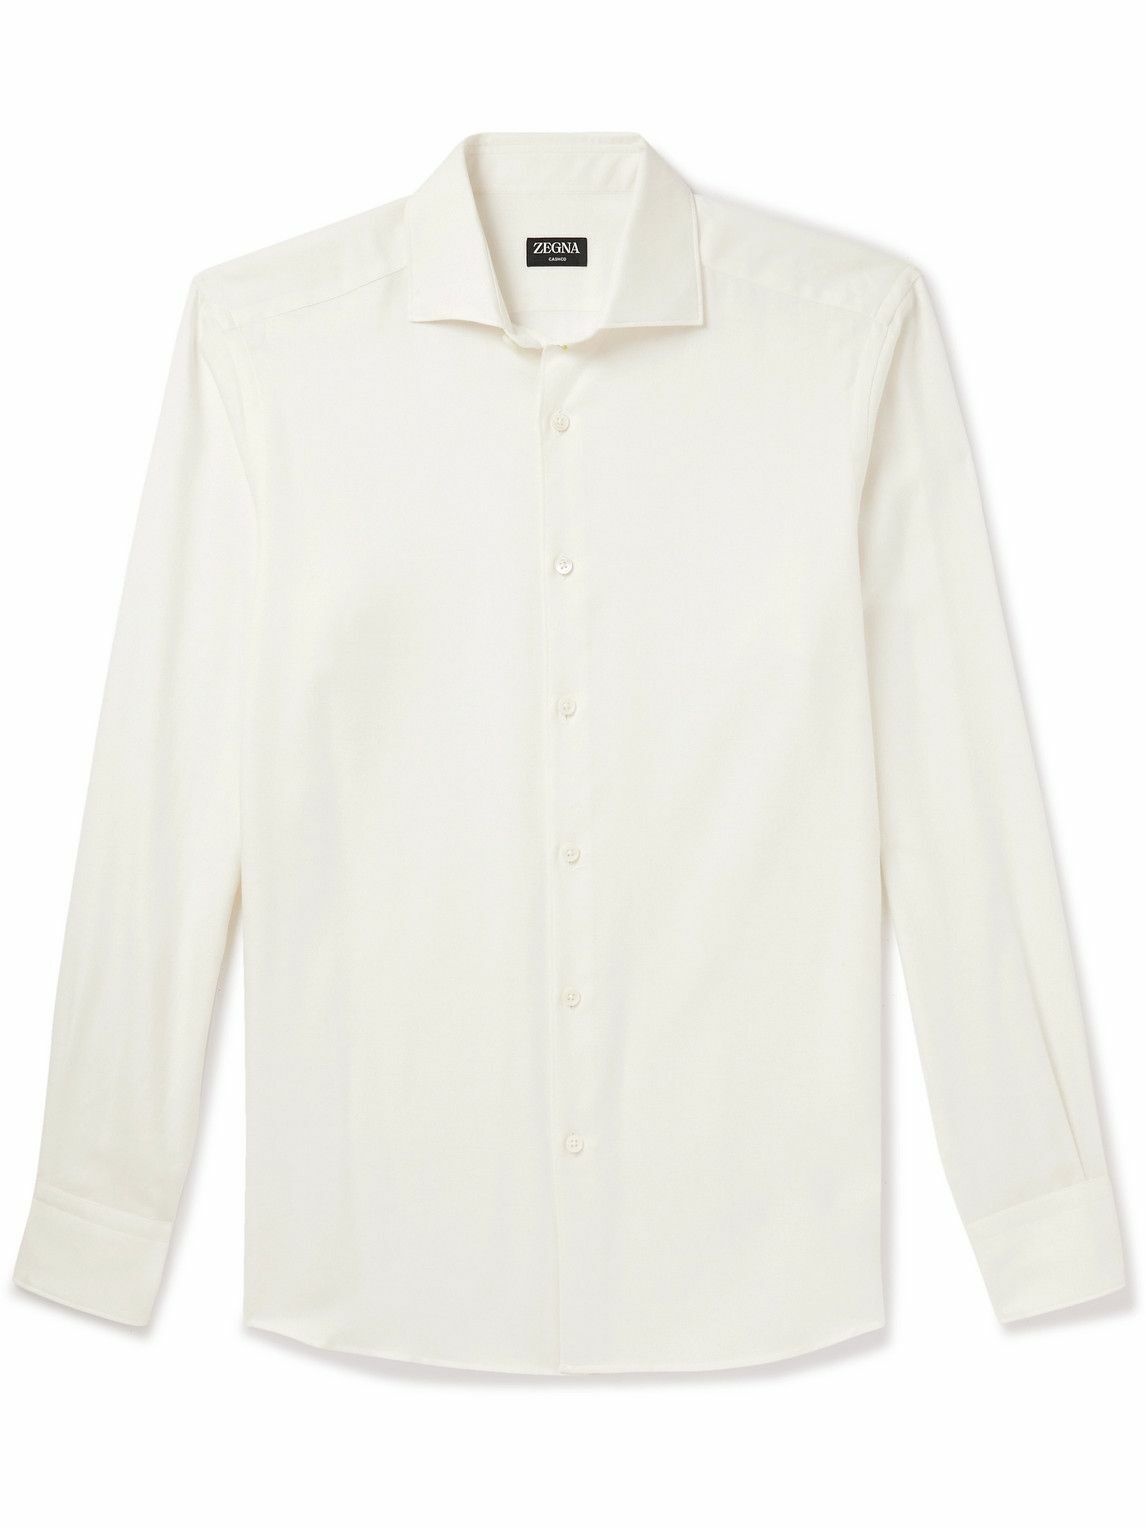 Zegna - Cotton and Cashmere-Blend Twill Shirt - White Zegna